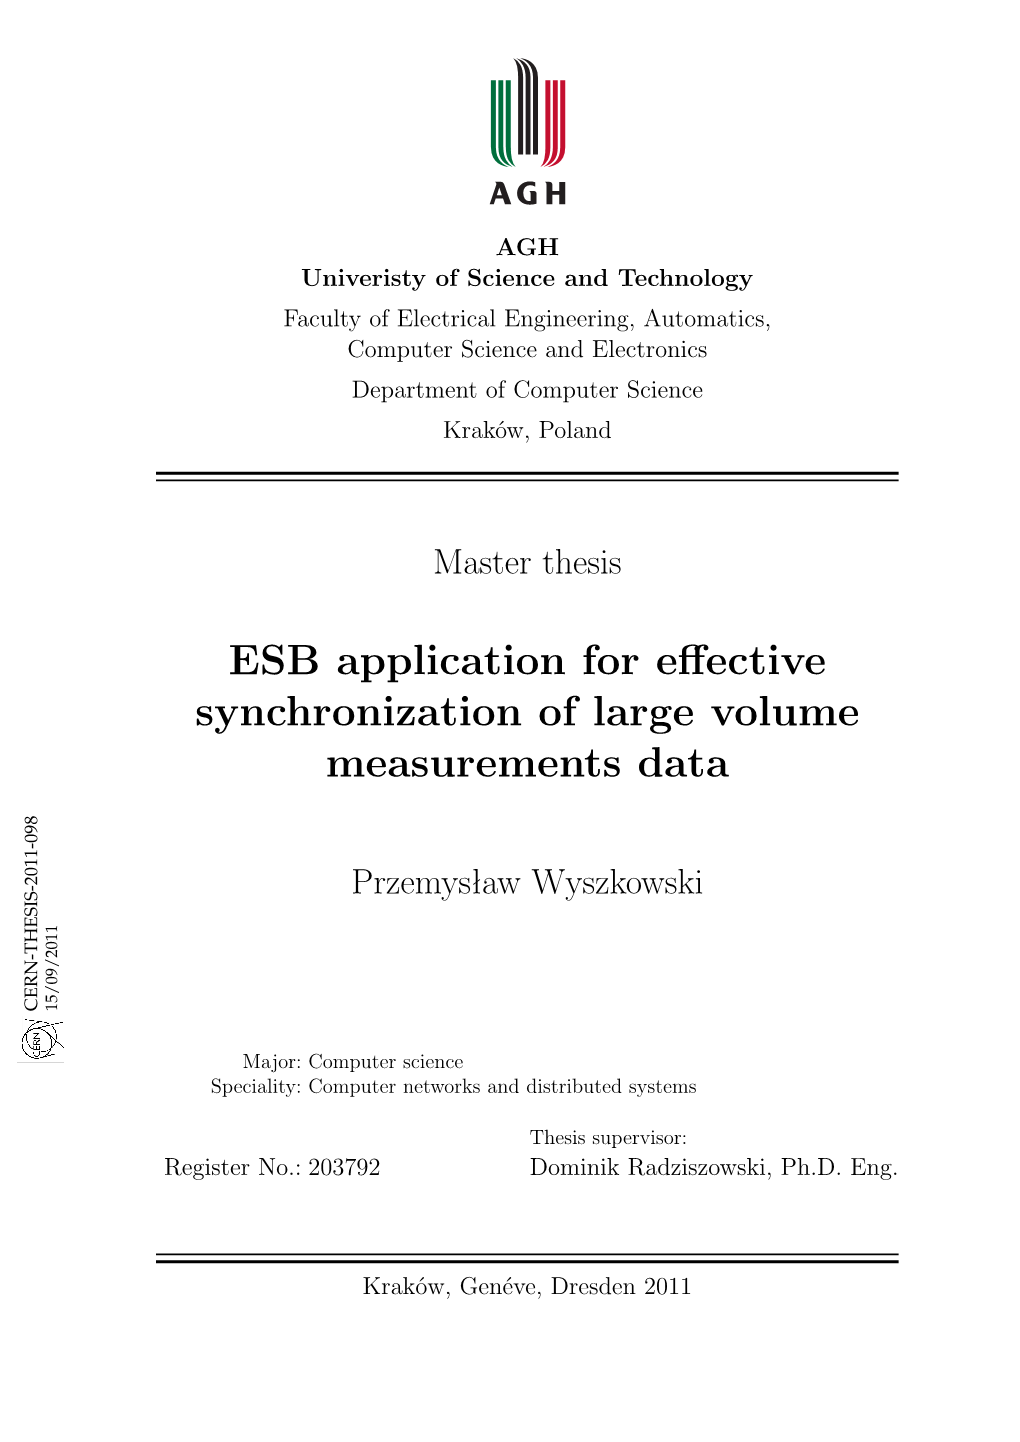 ESB Application for Effective Synchronization of Large Volume Measurements Data